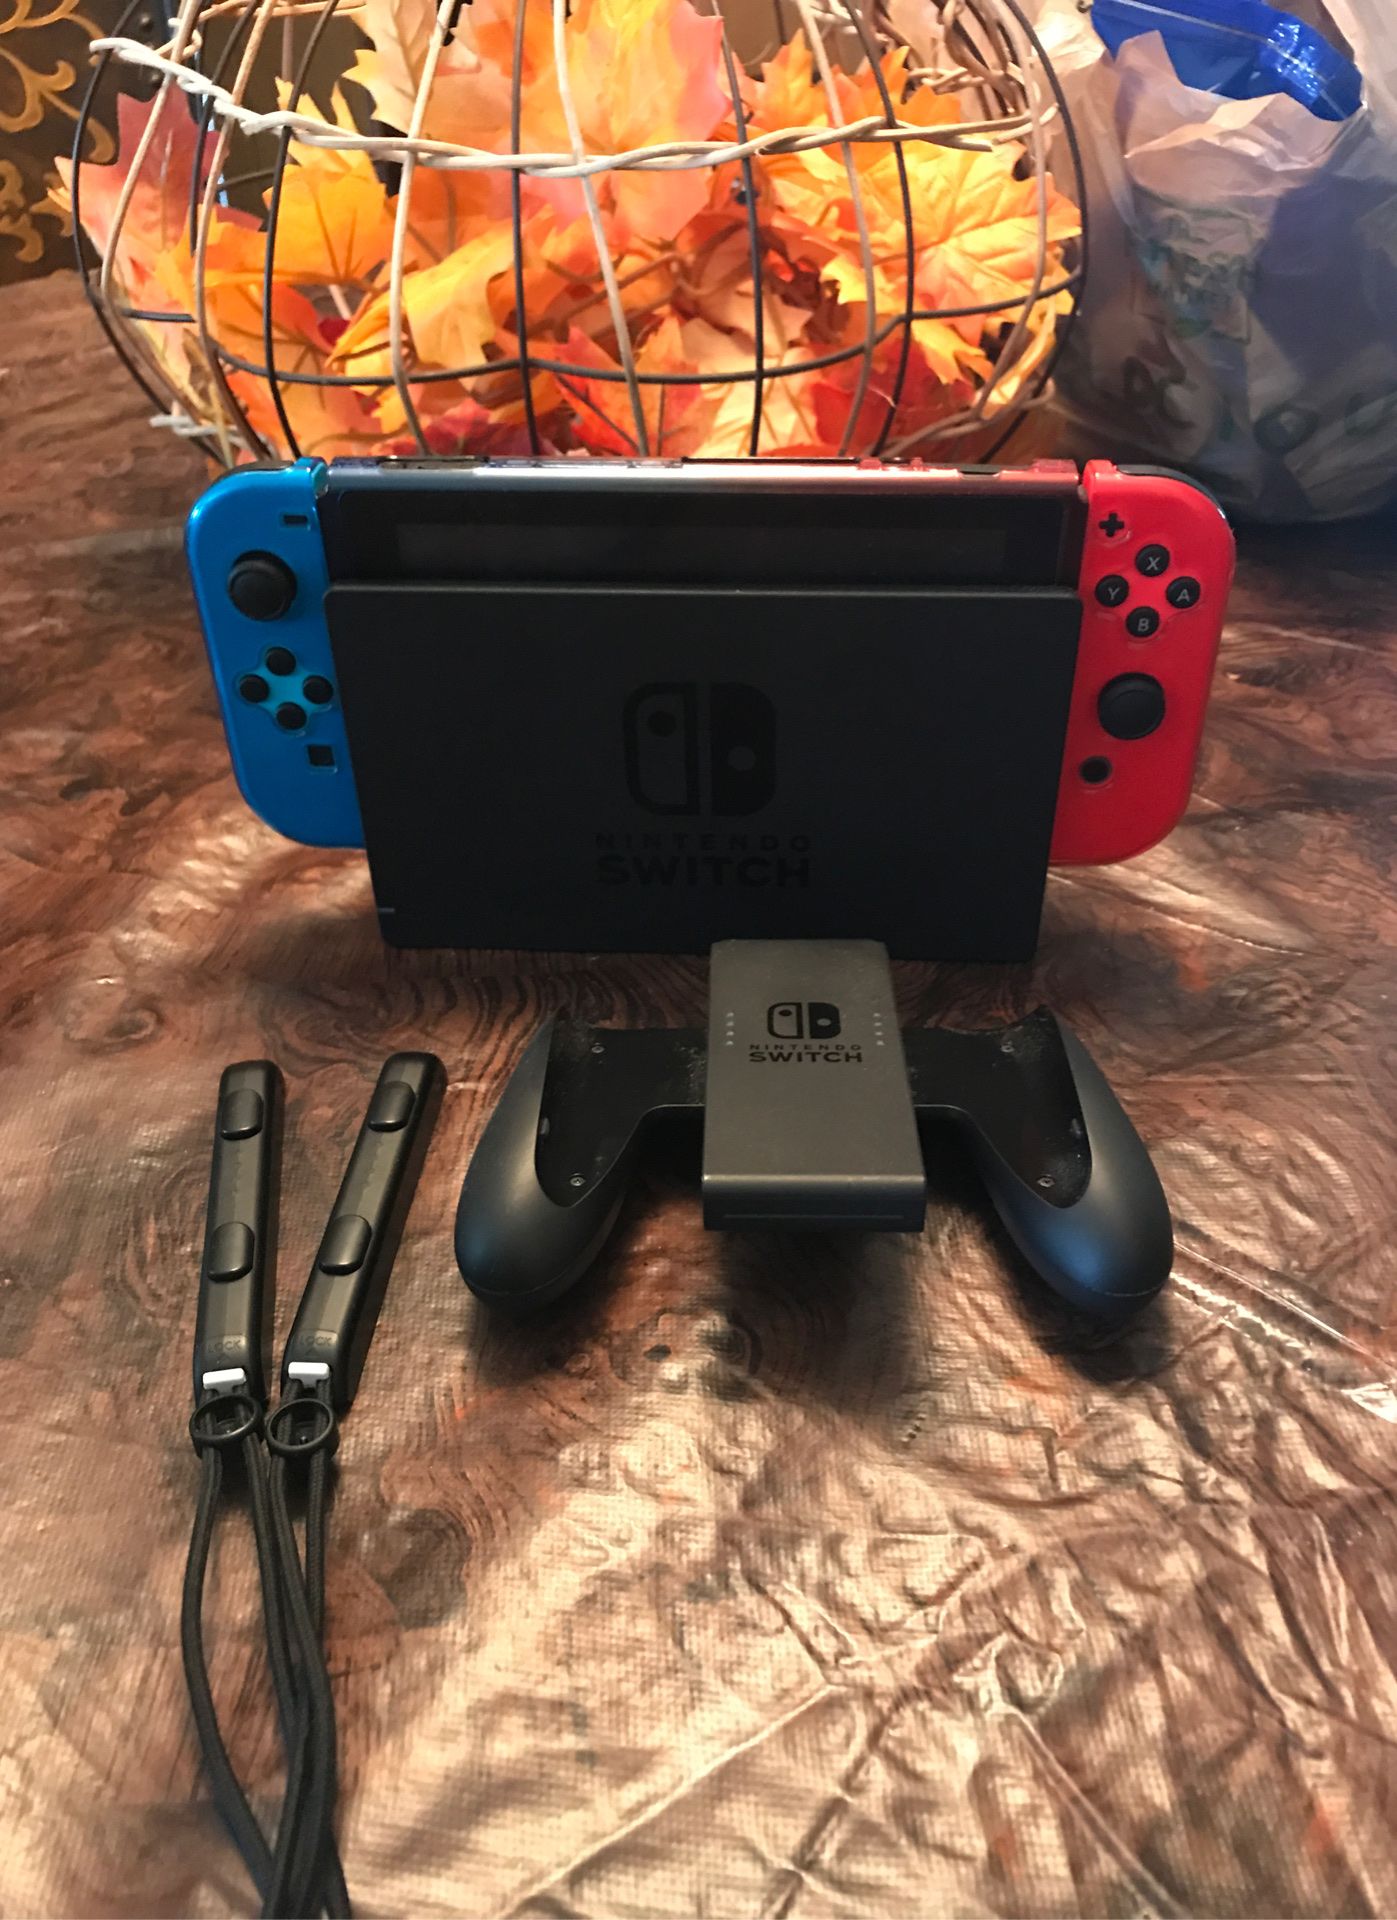 Nintendo Switch with joy cons